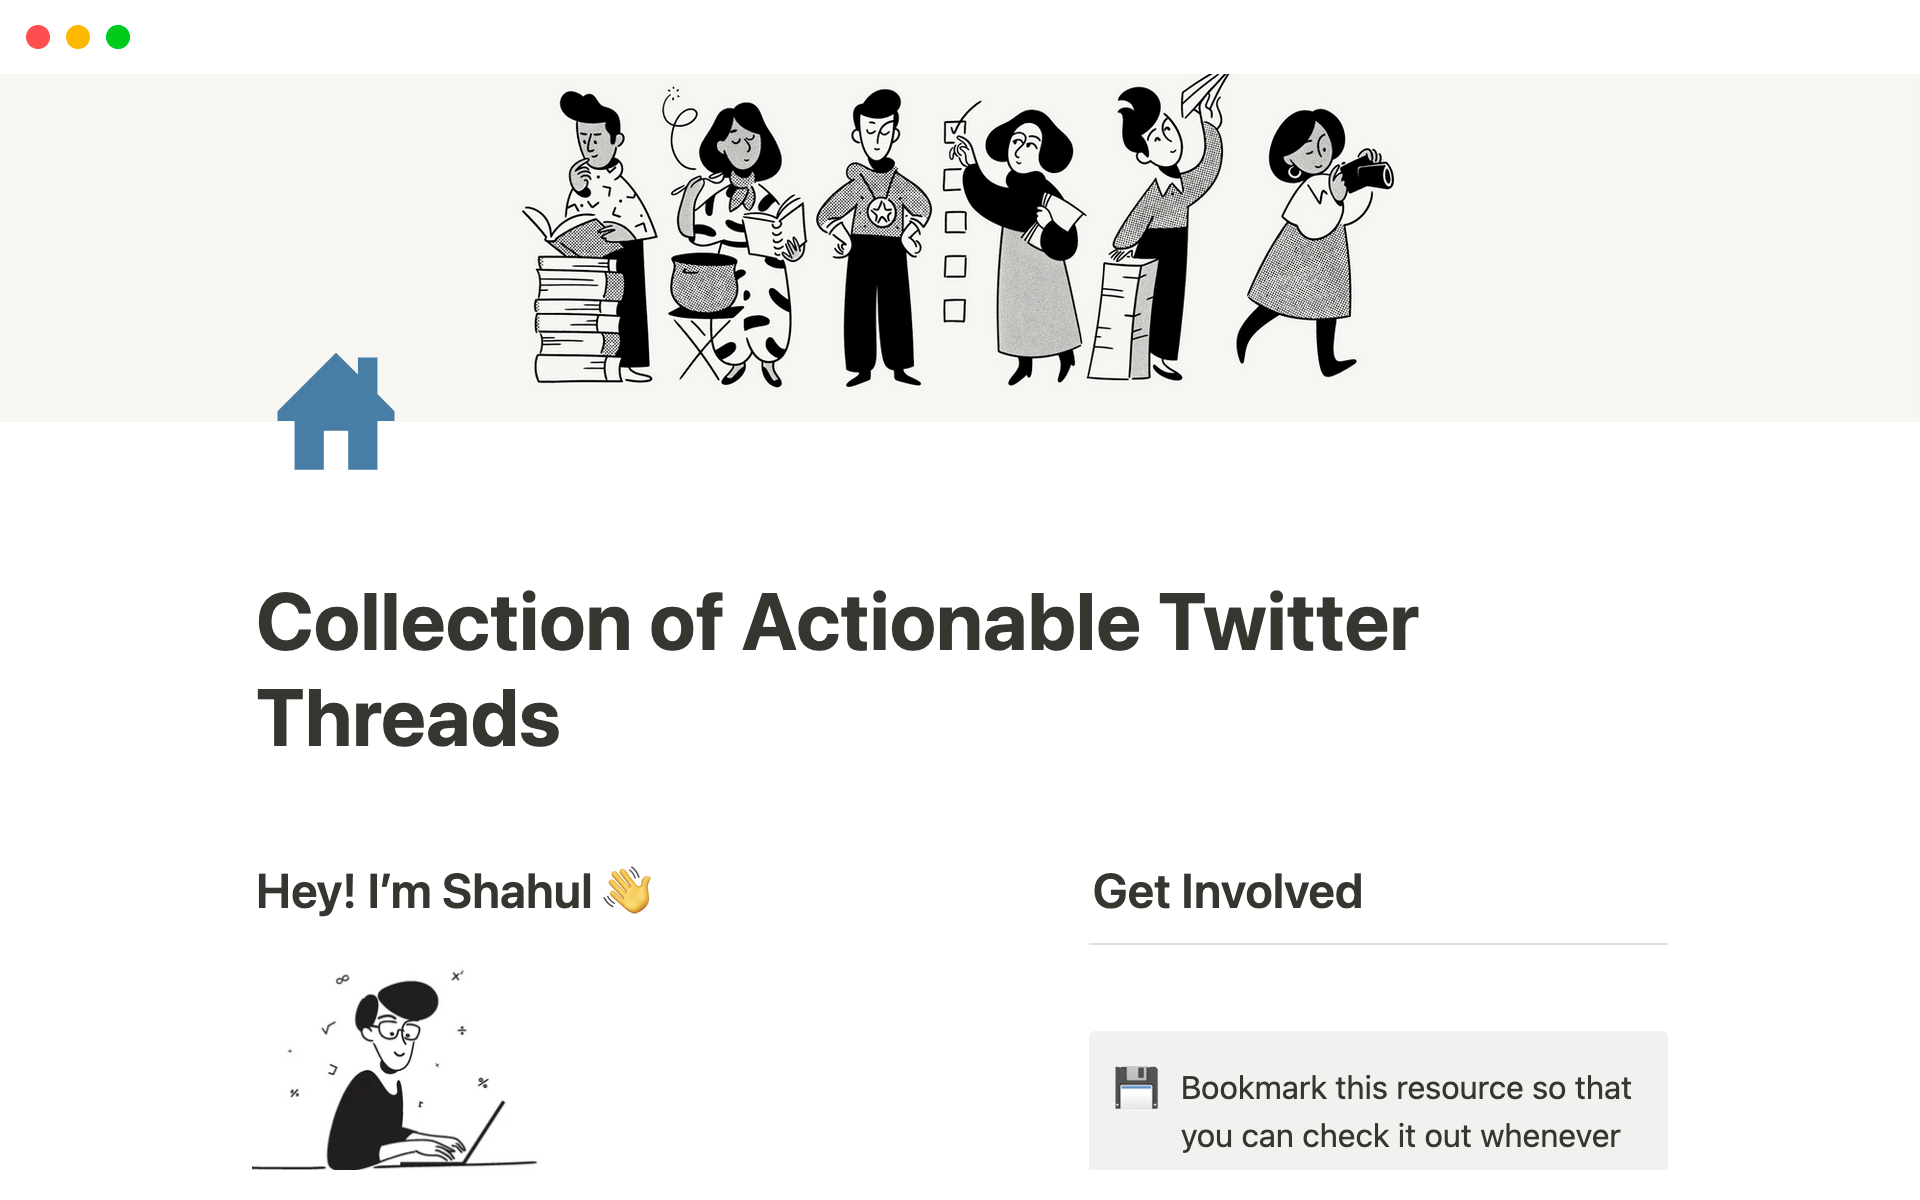 Uma prévia do modelo para Collection of Actionable Twitter Threads